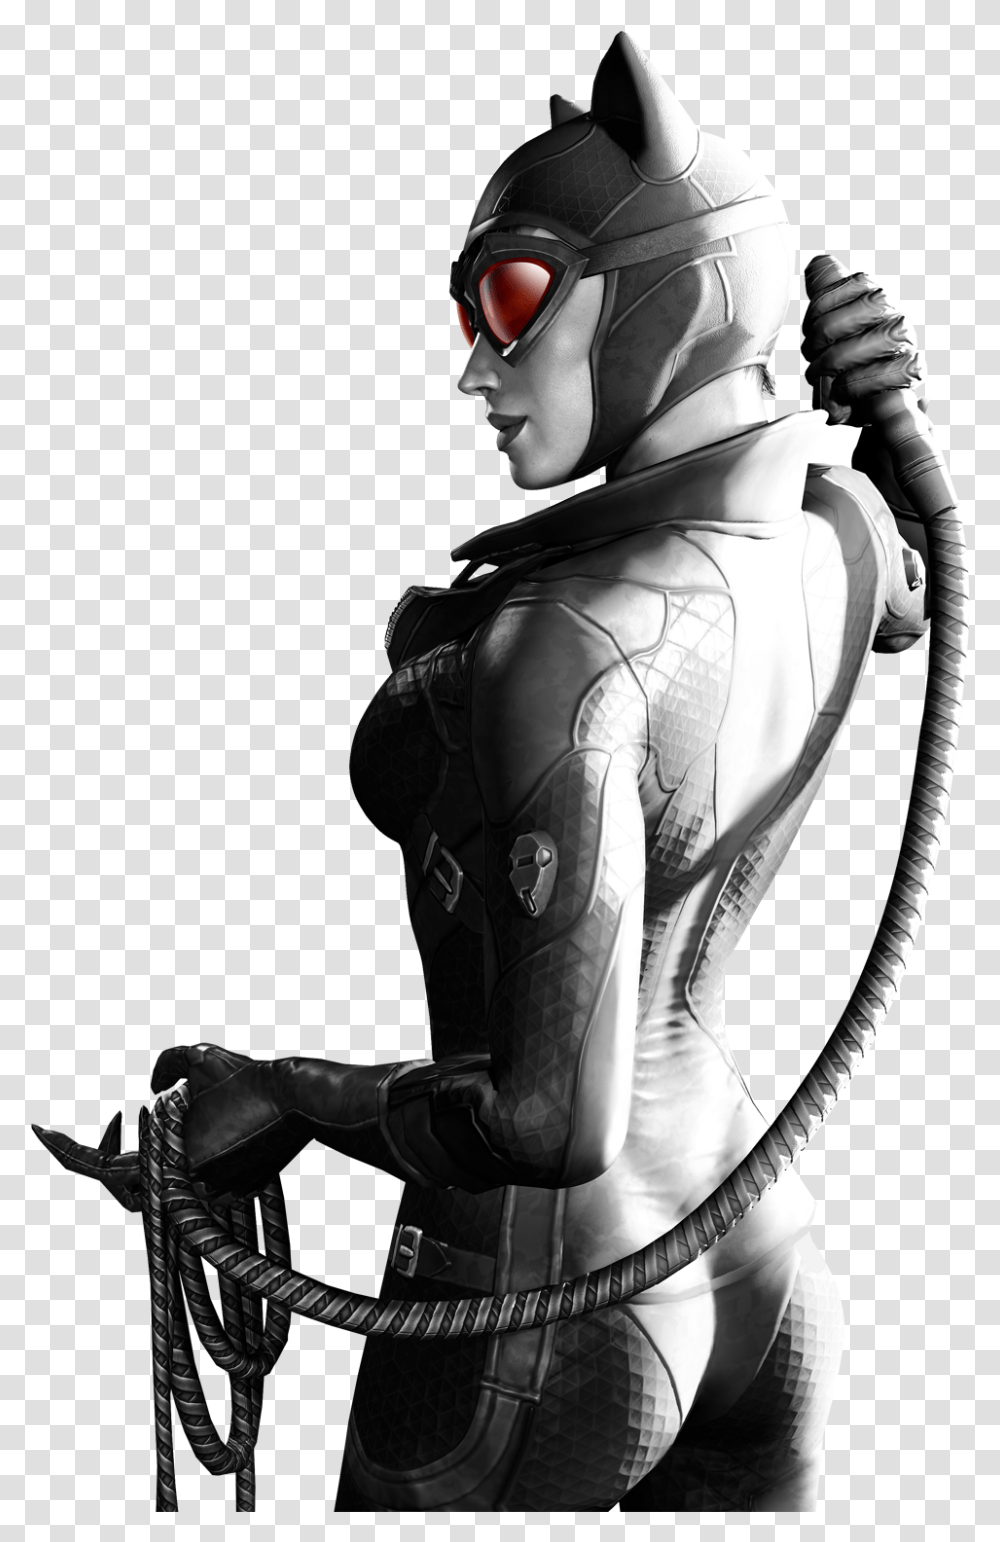 Catwoman 4 Image Catwoman Batman Video Game, Skin, Helmet, Clothing, Apparel Transparent Png